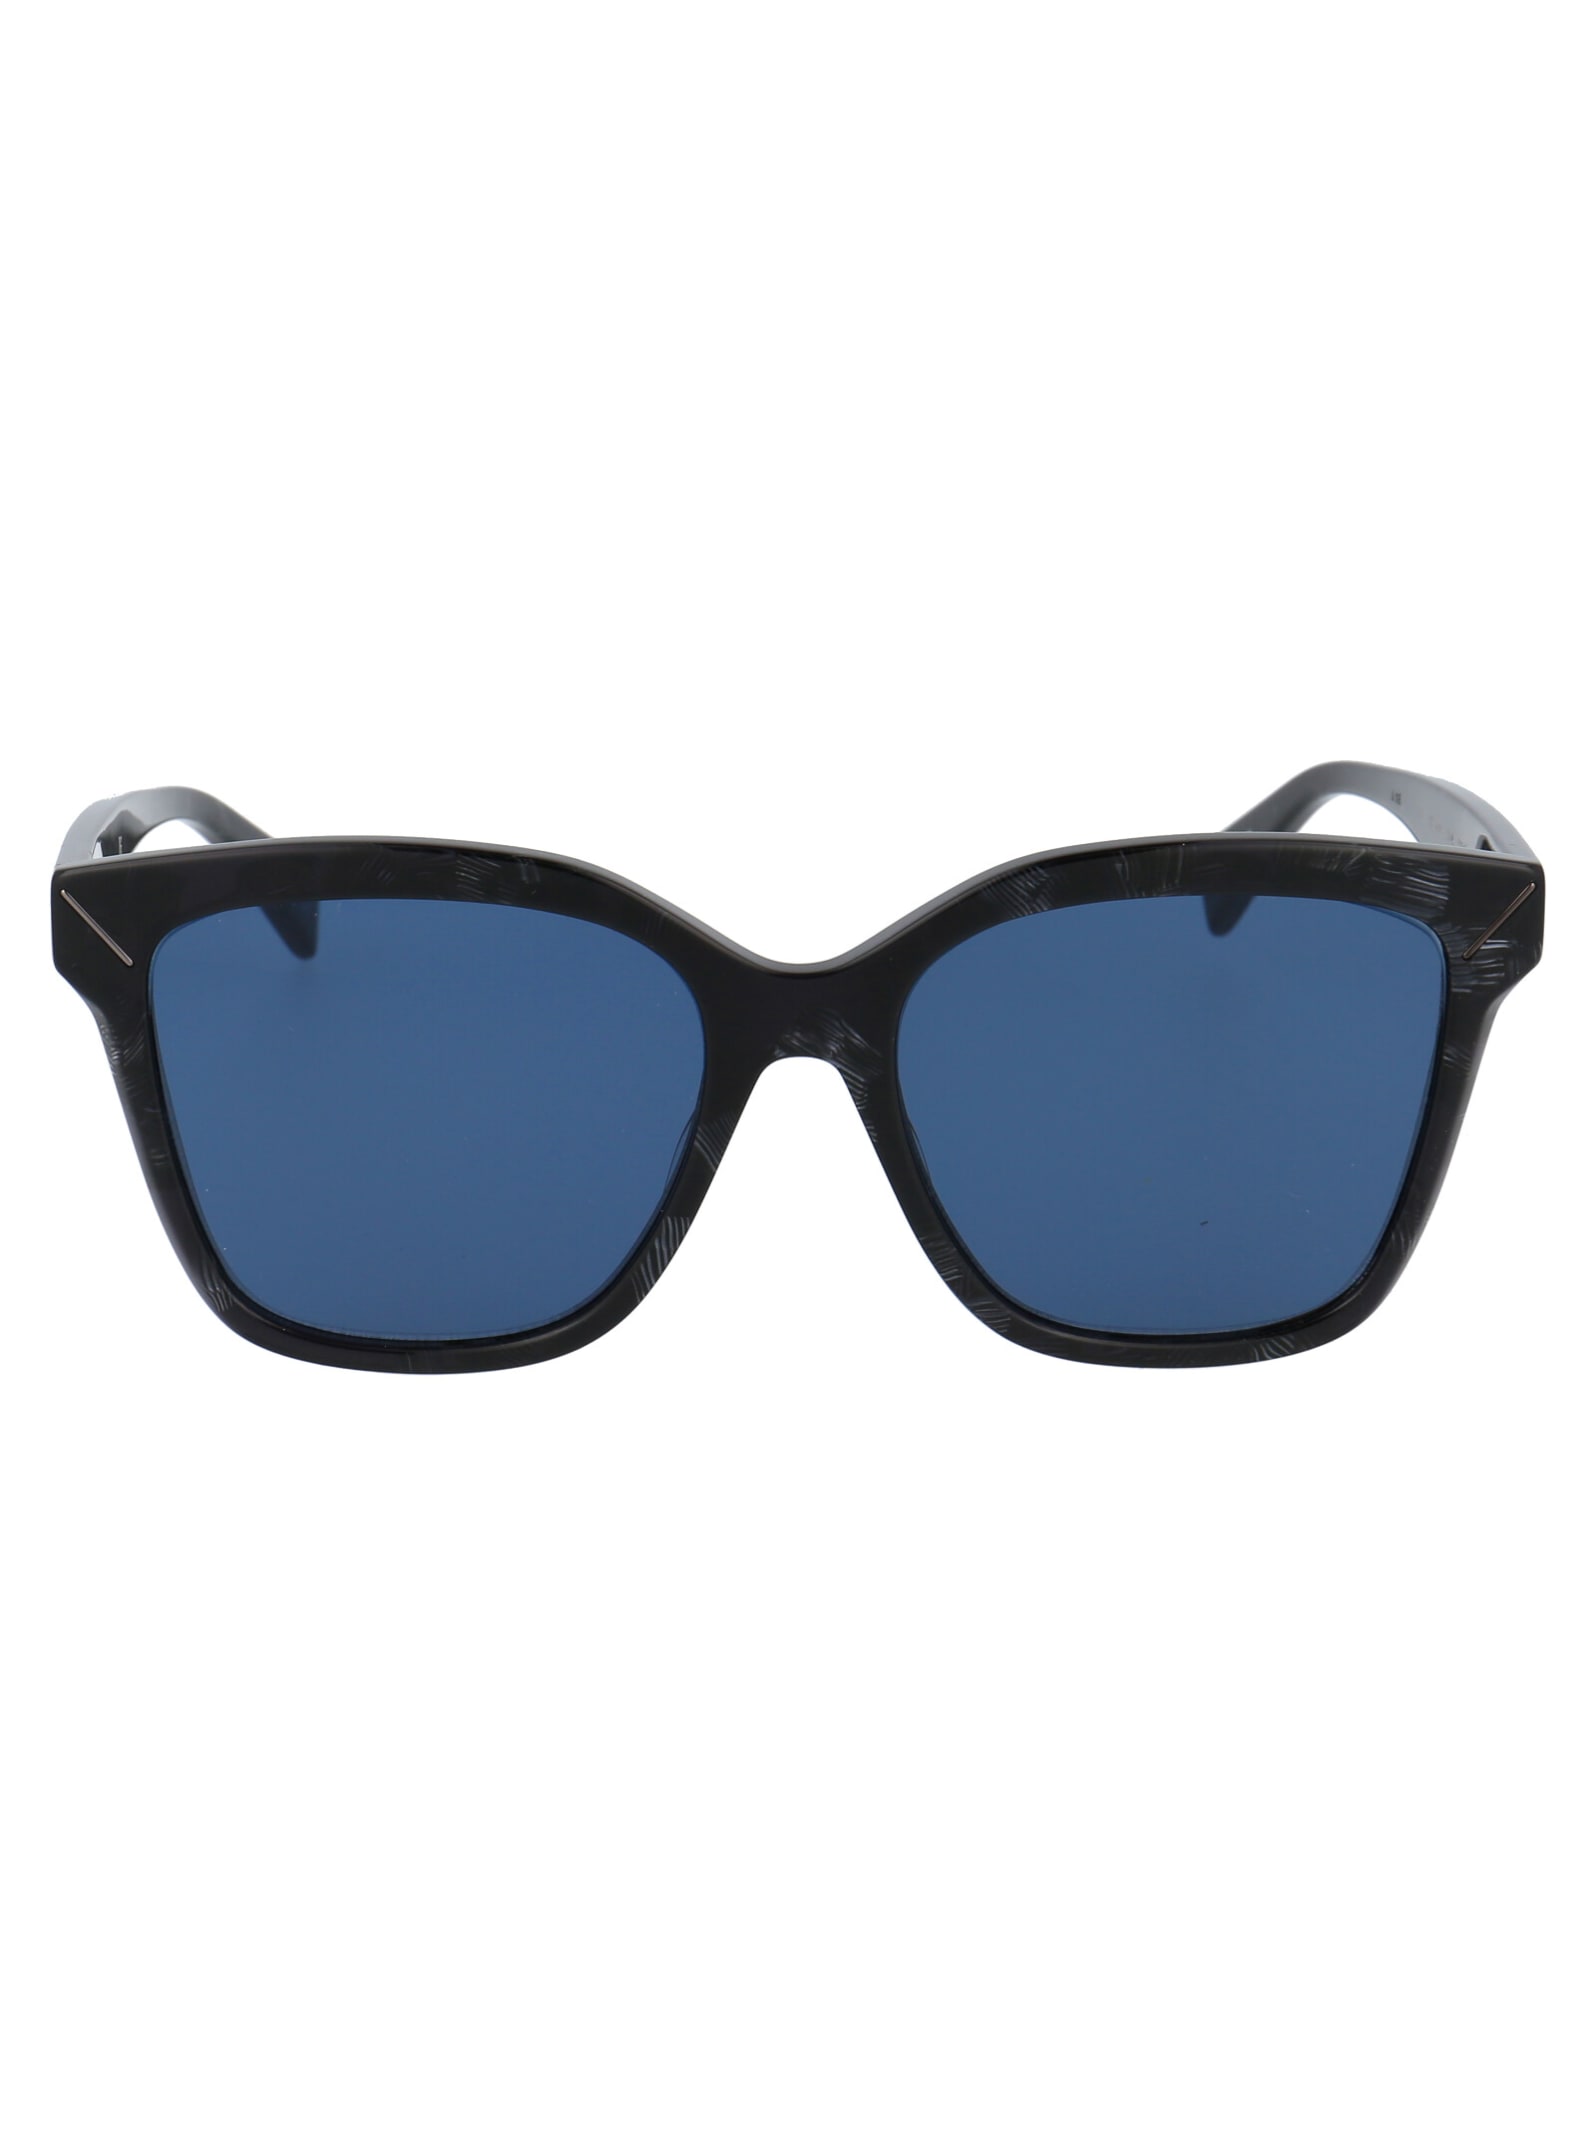 Yohji Yamamoto Ys5002 Sunglasses In 024 Grey Shell